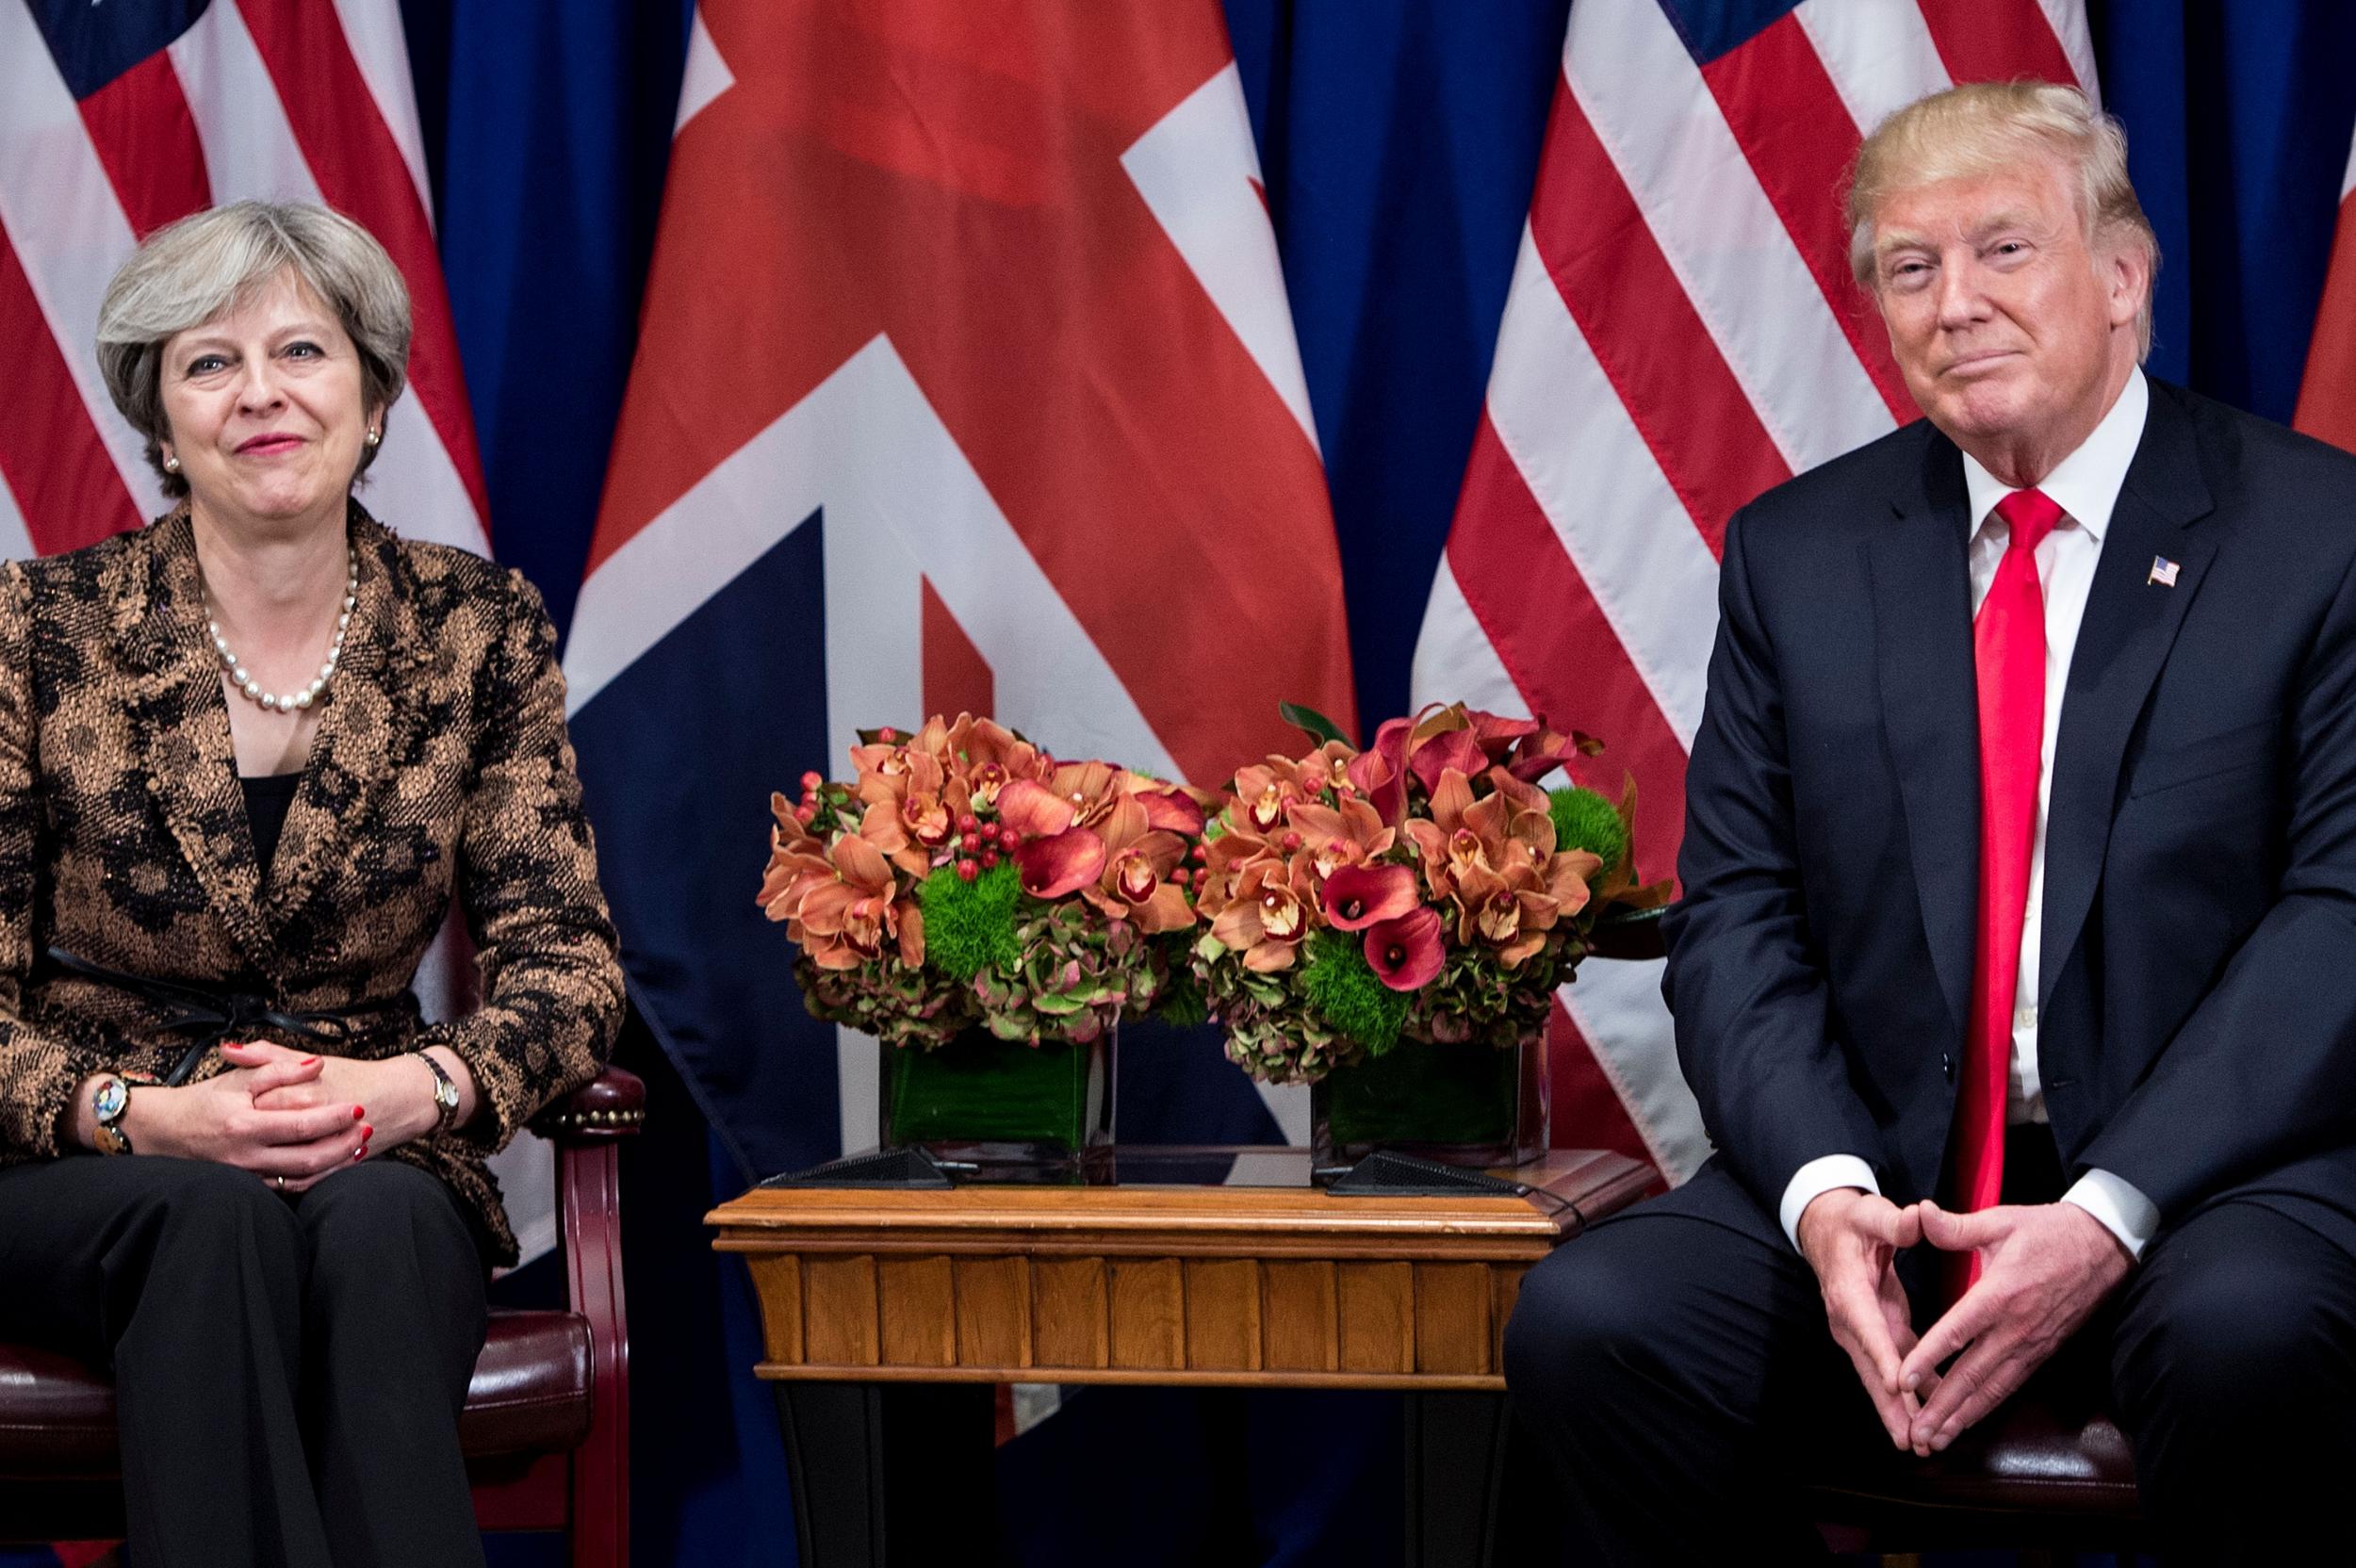 Theresa May and Donald Trump during UN General Assembly